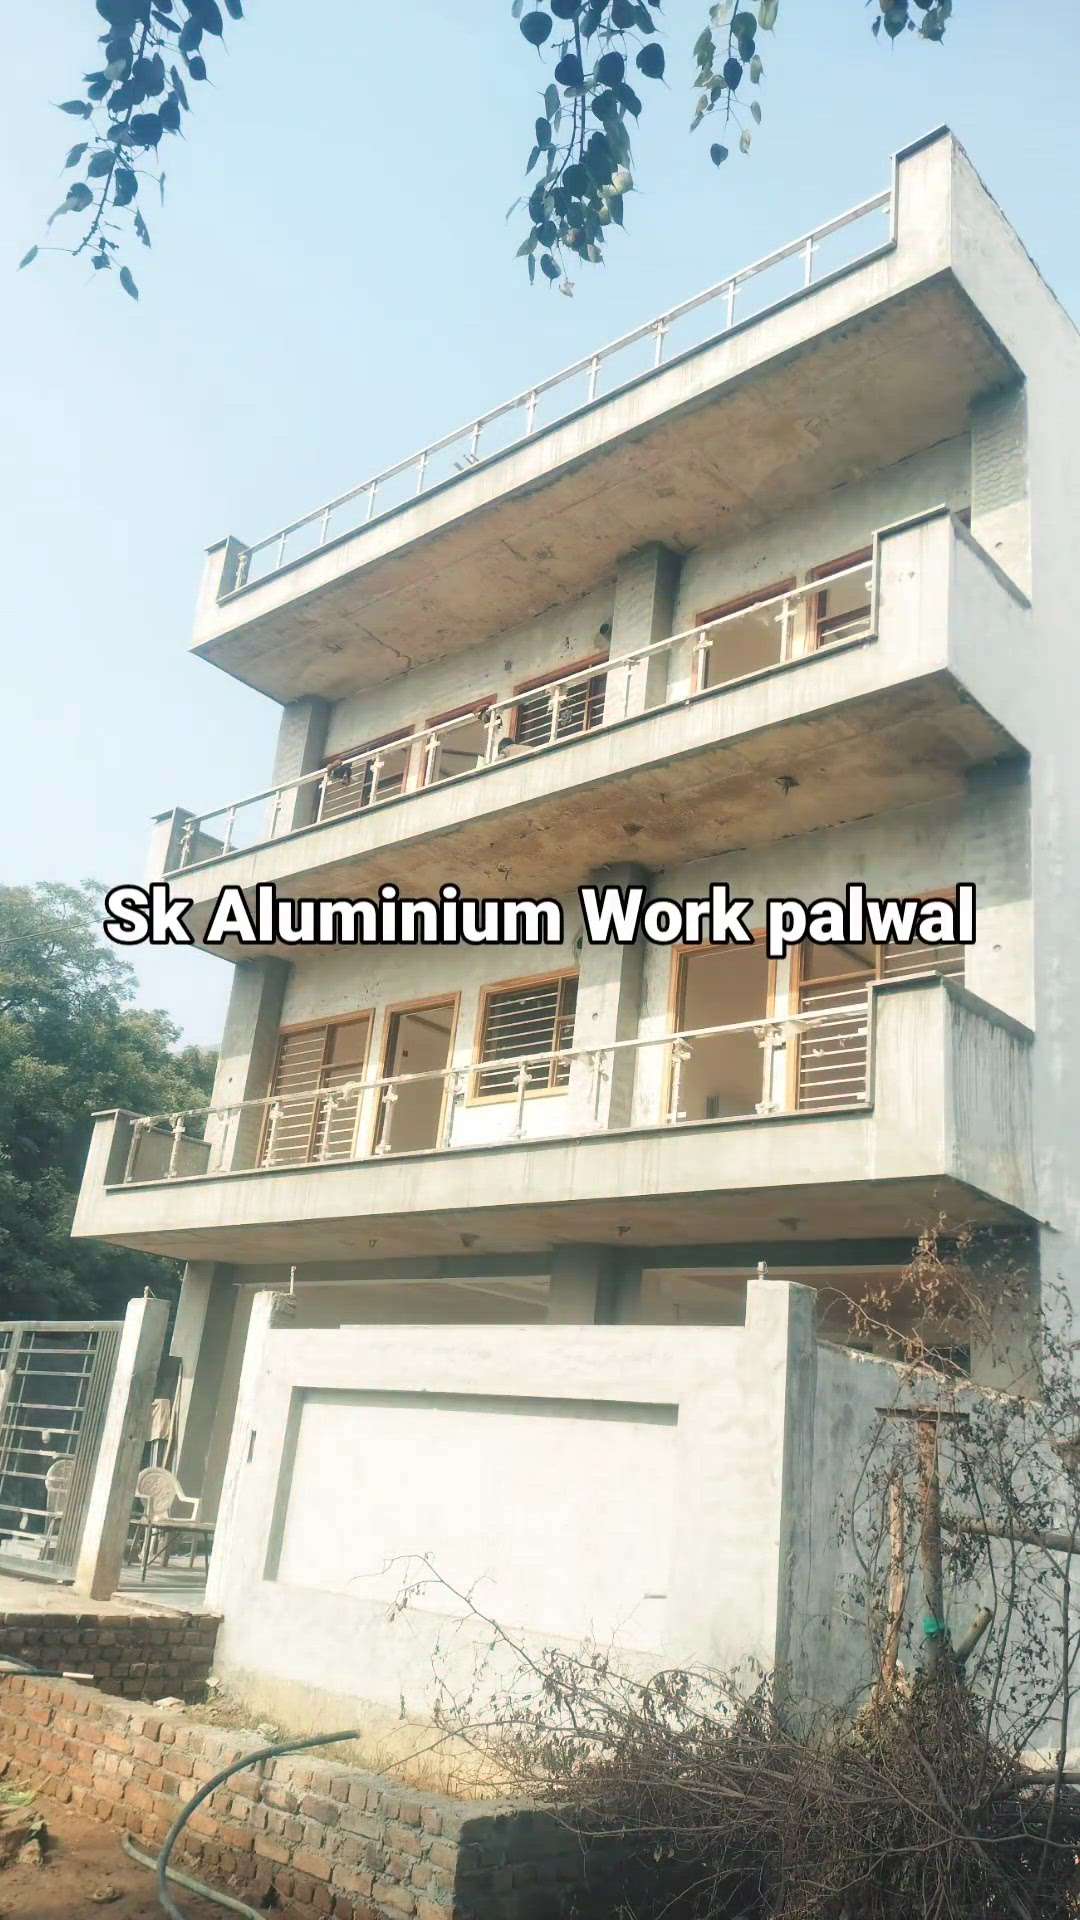 Sk Aluminium Work palwal frant elevation